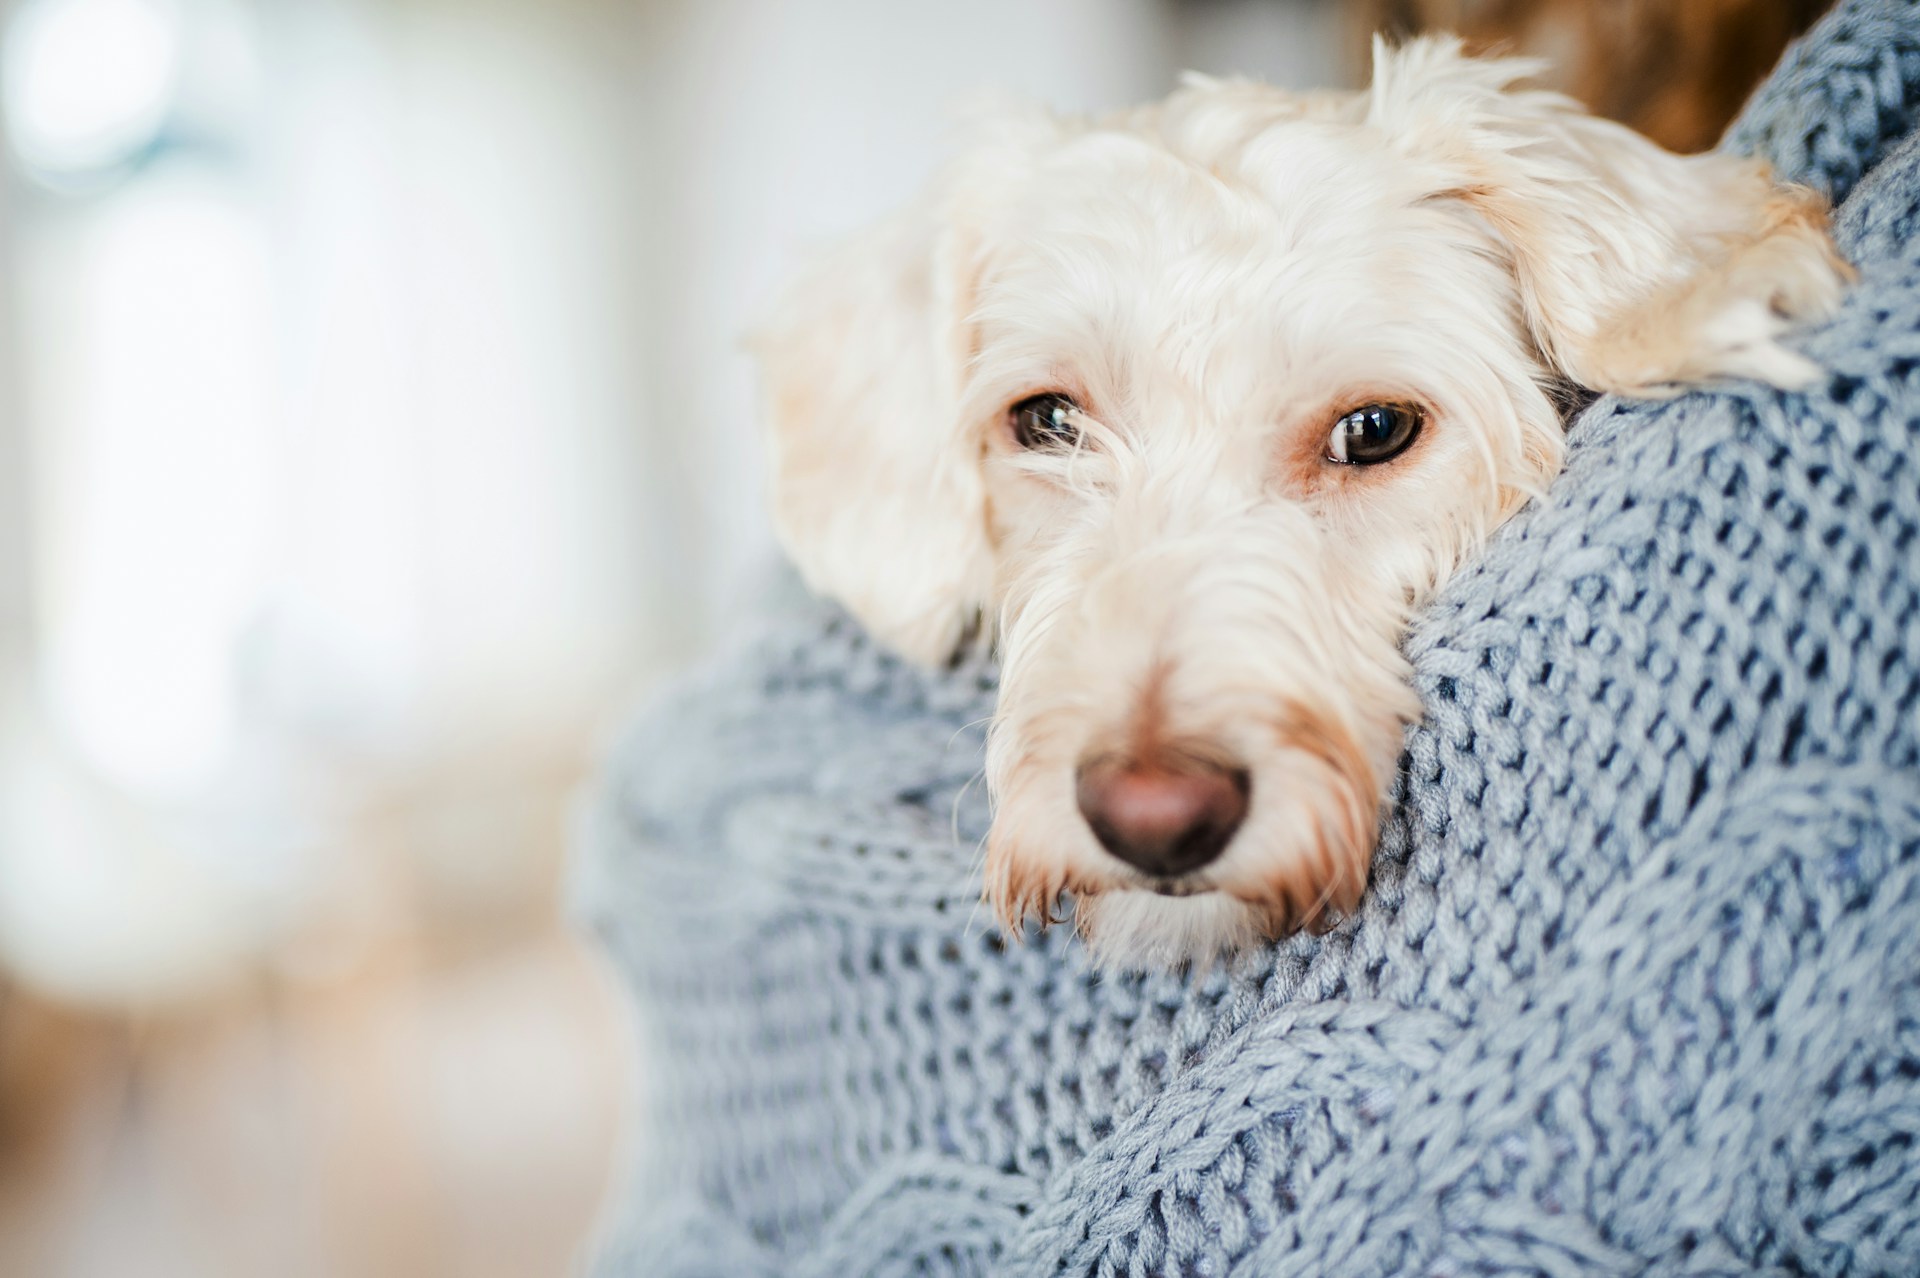 A sick dog cuddled by a woman wearing a blue sweater